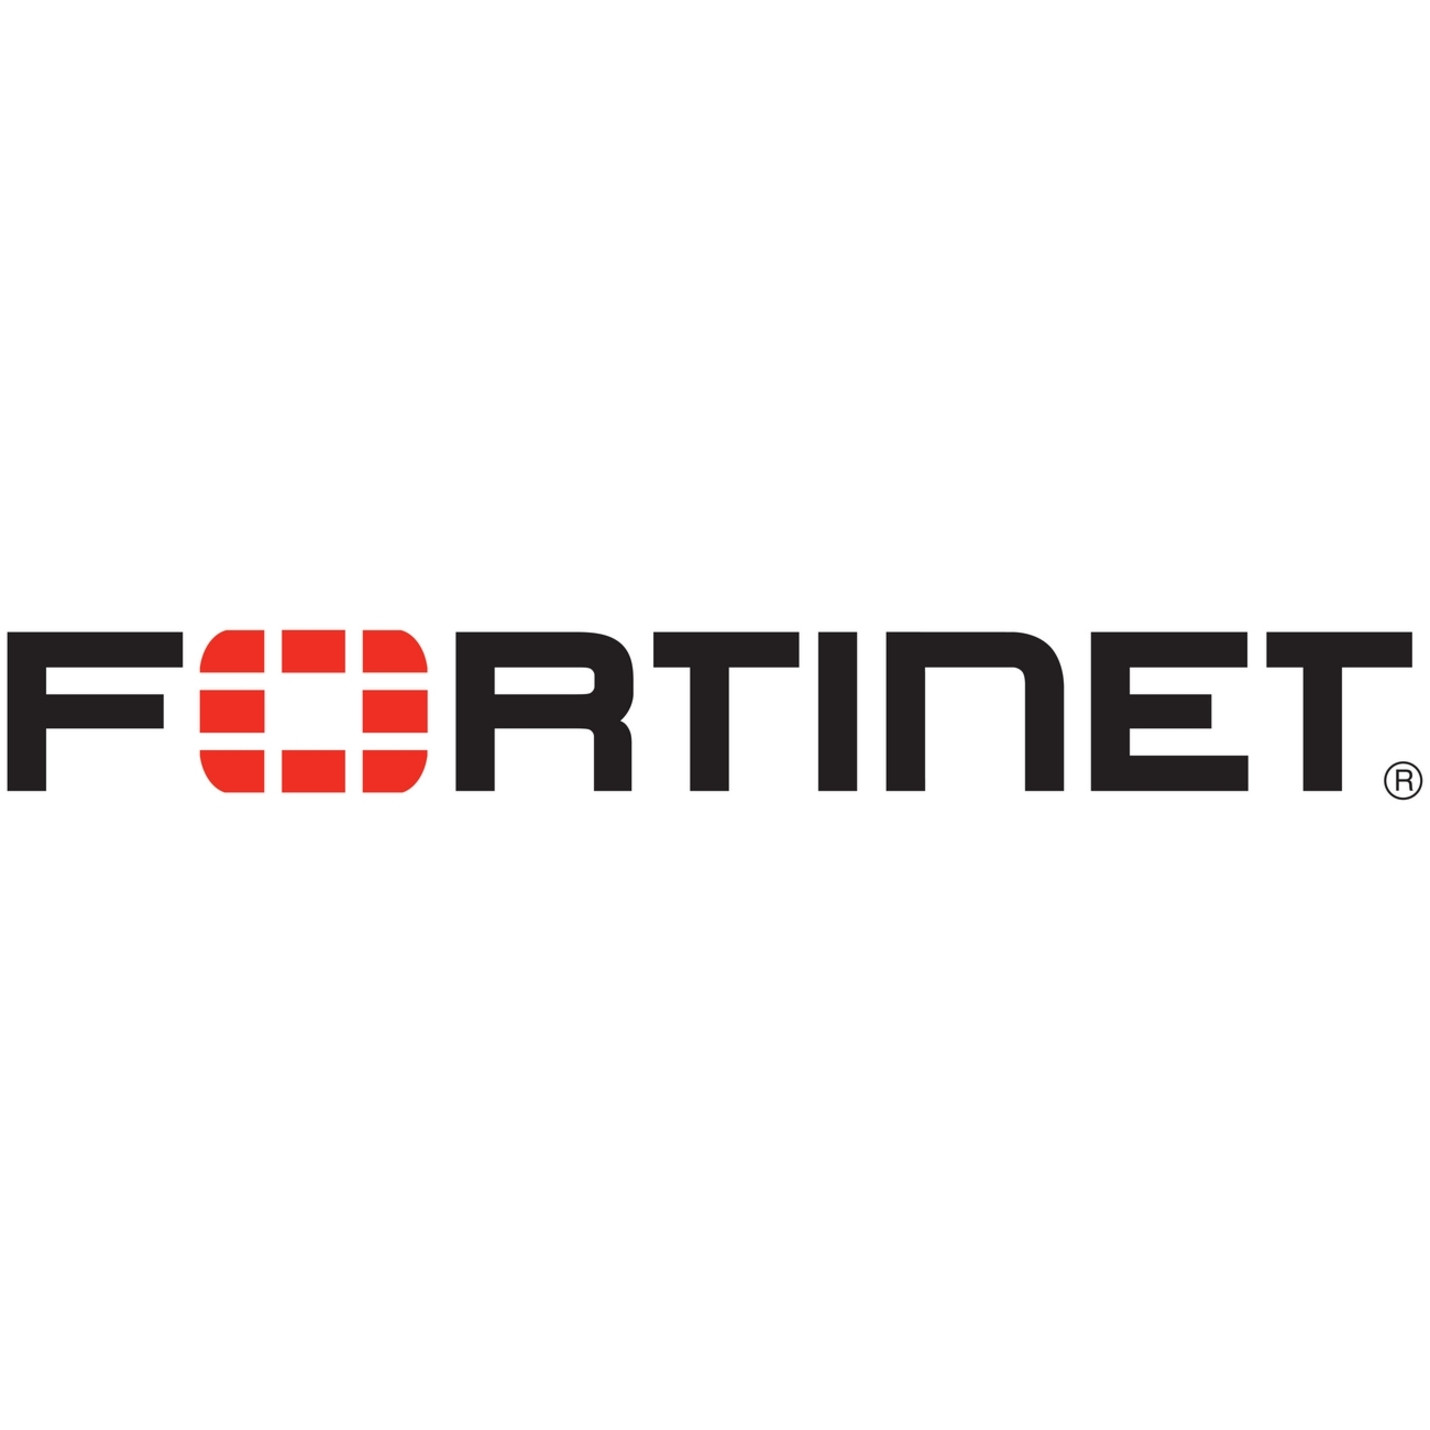 Fortinet Enterprise Bundle (FortiCare plus NGFW, AV, Web Filtering, Antispam, Botnet IP/Domain, FortiSandbox Cloud and Mobile Secu… FC-10-03981-974-0…